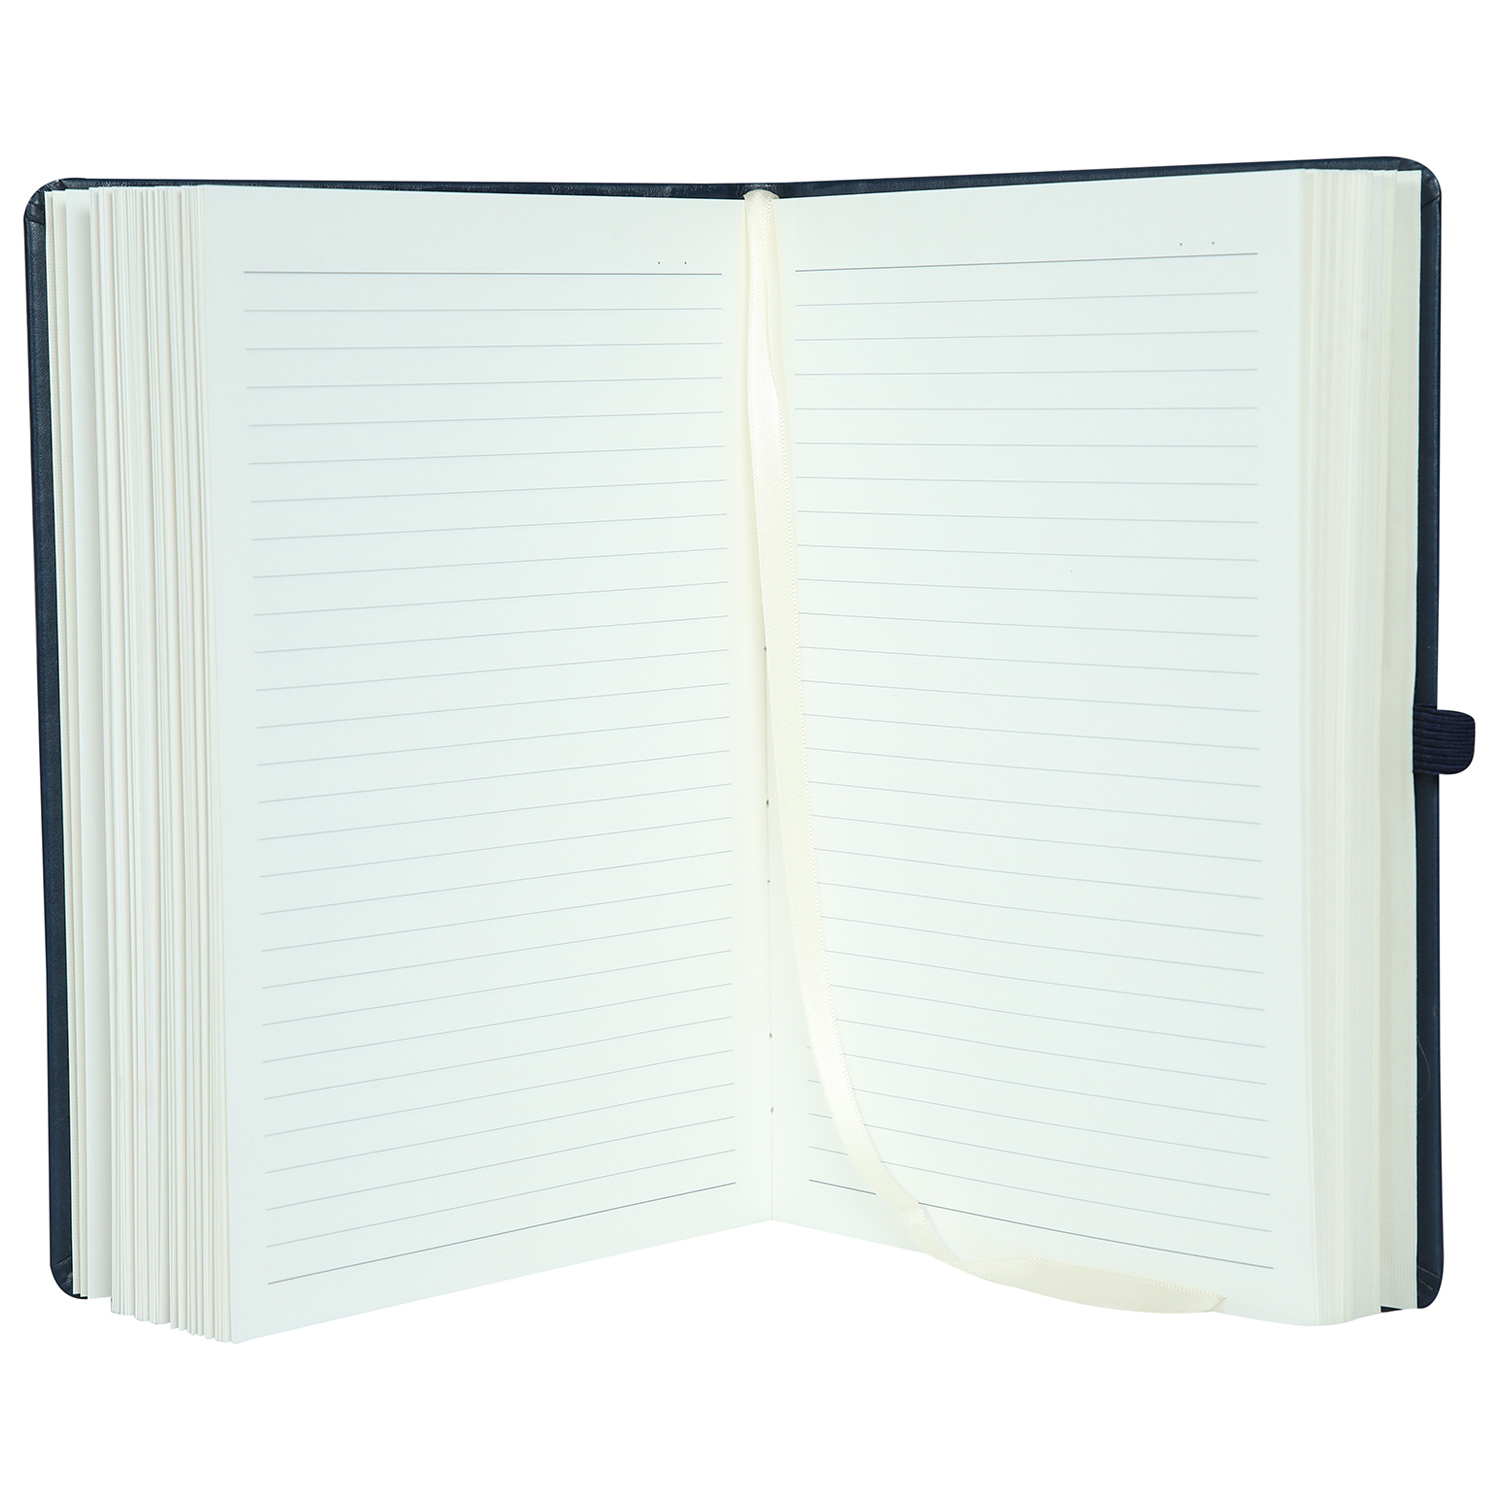 Mahavir Personal Notes - A5 Size - Hard Bound Notebook (Navy Blue)